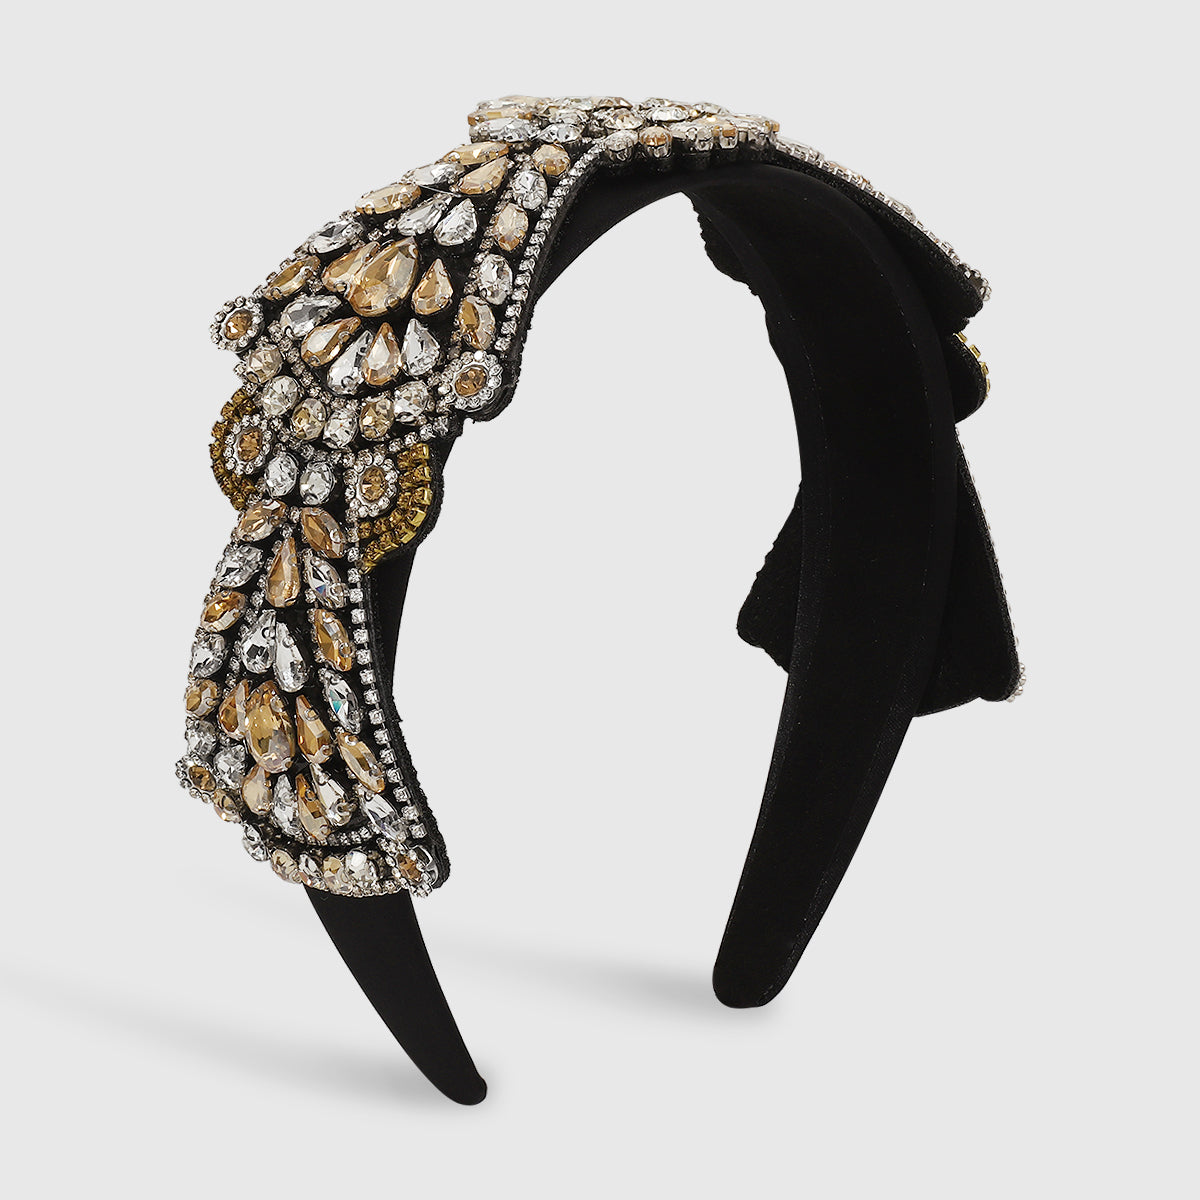 Exquisite Rhinestone Bow Headband medyjewelry